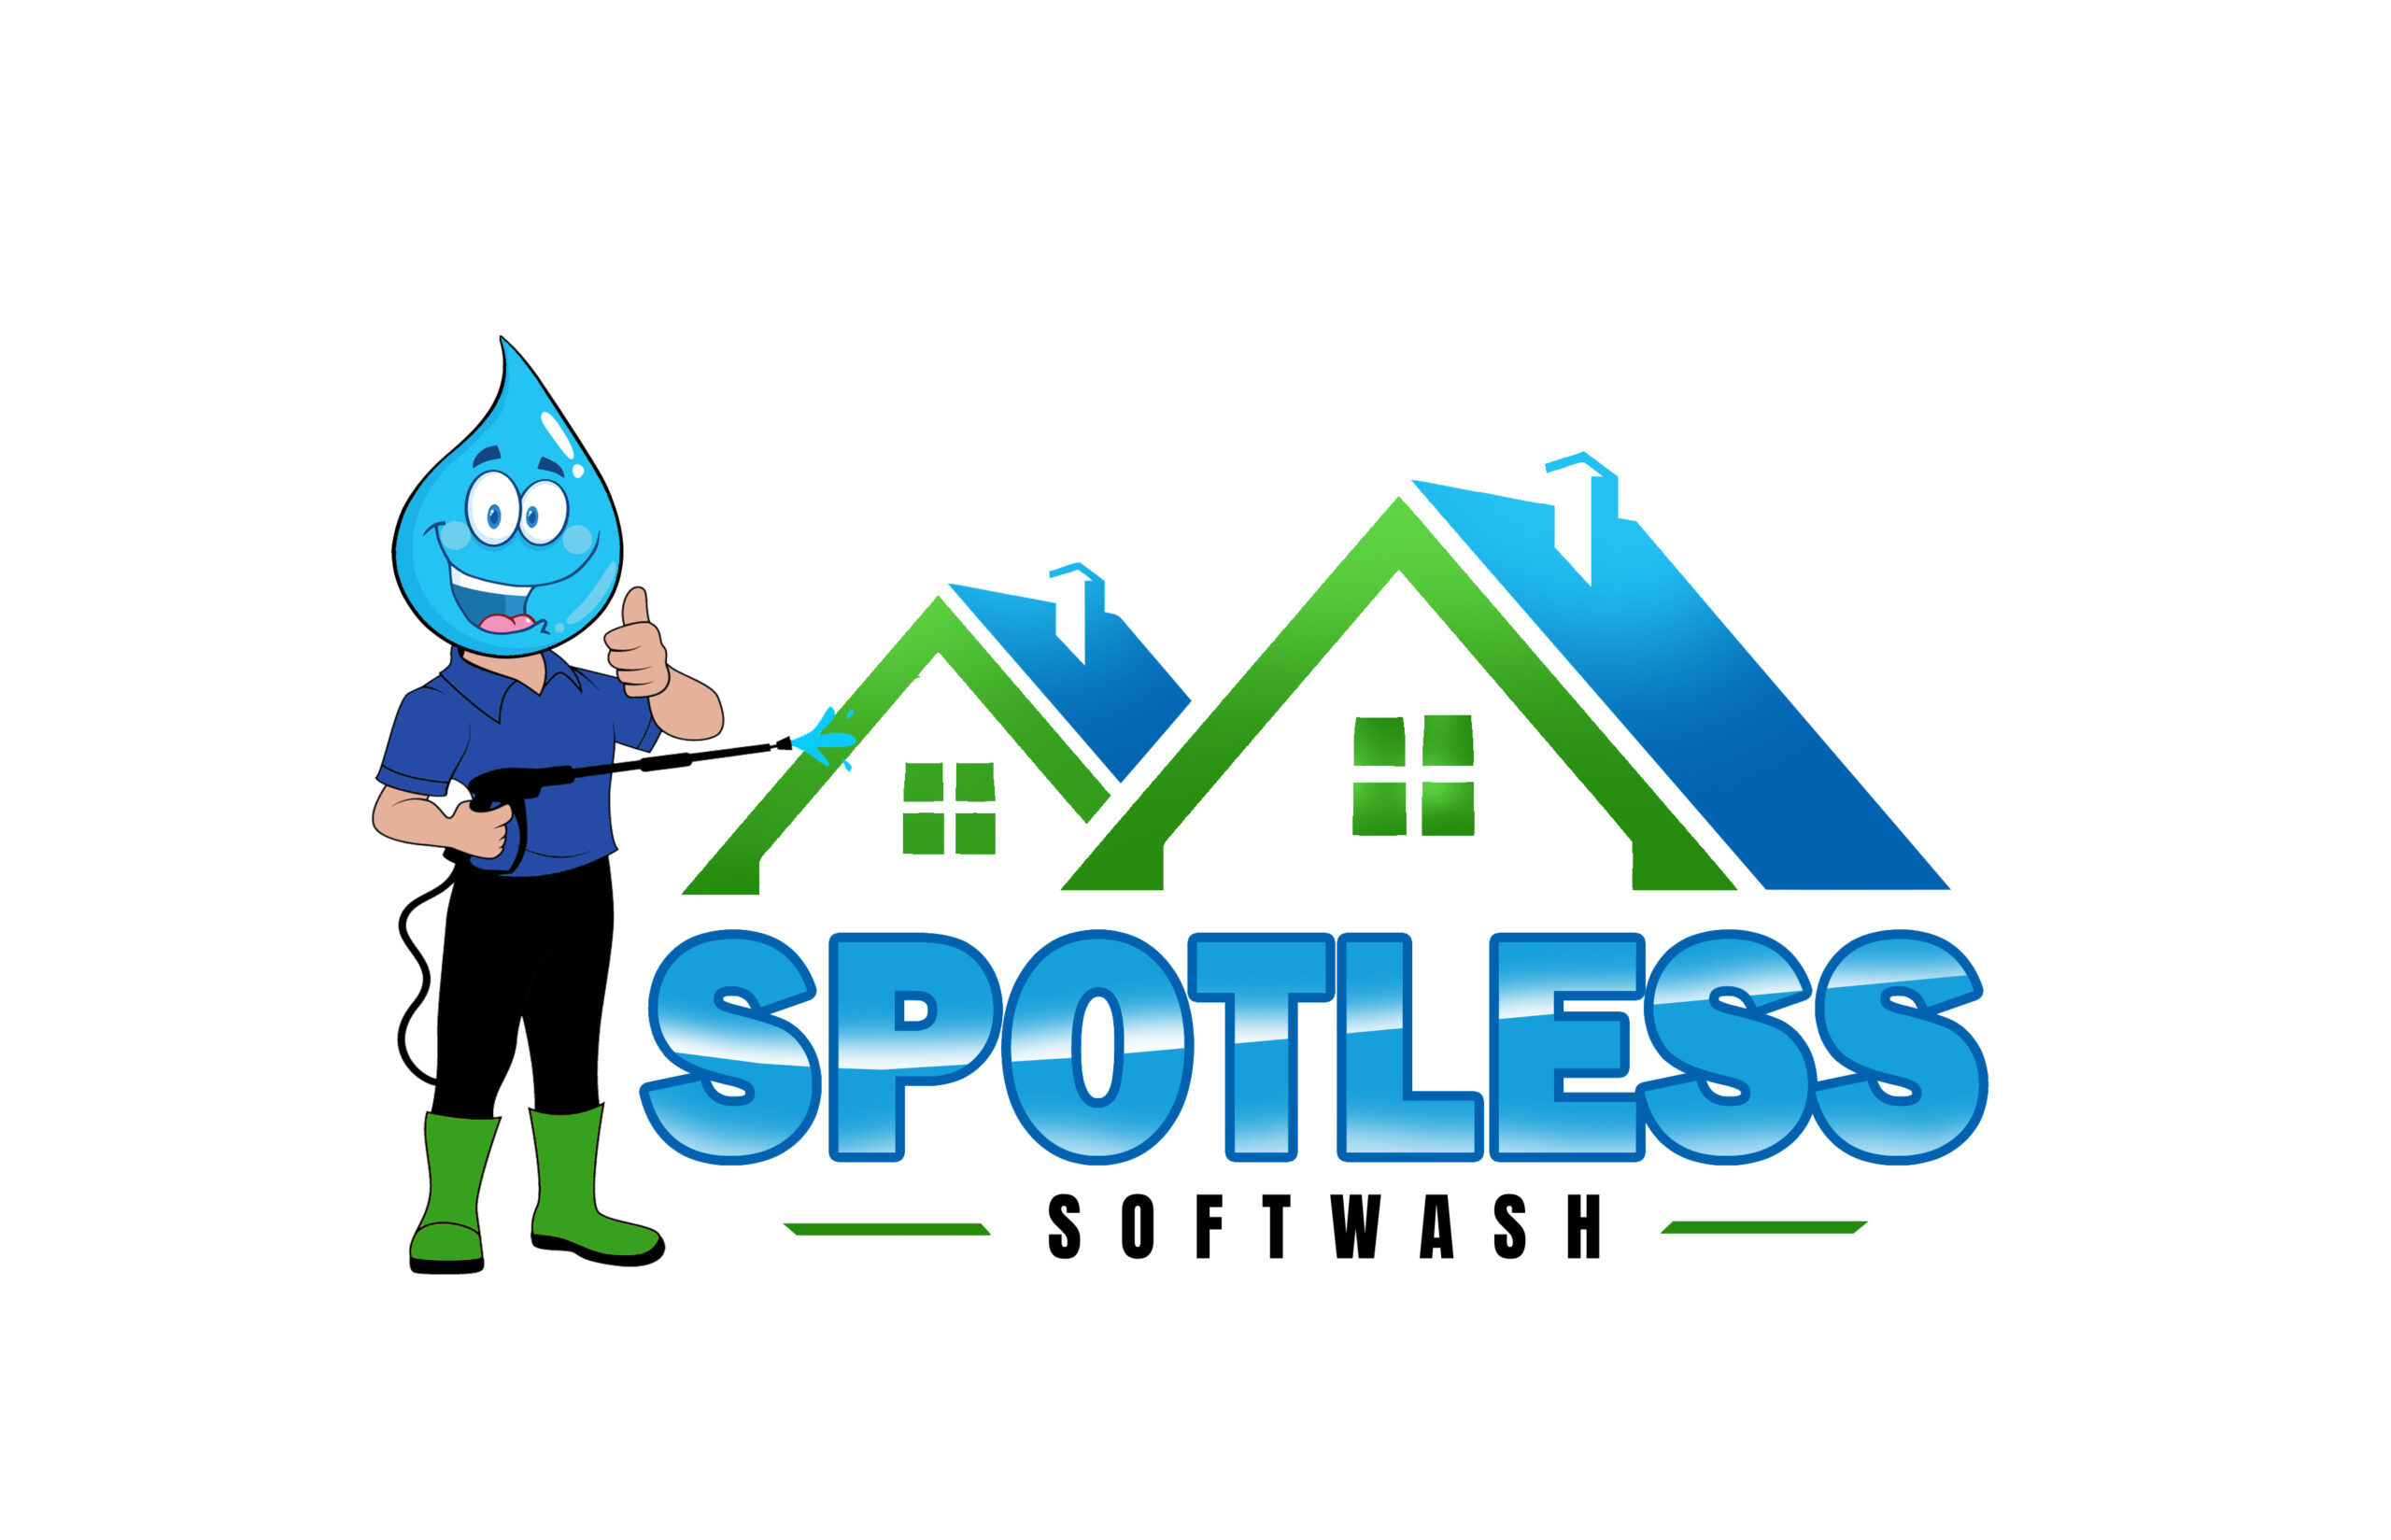 Spotless Softwash